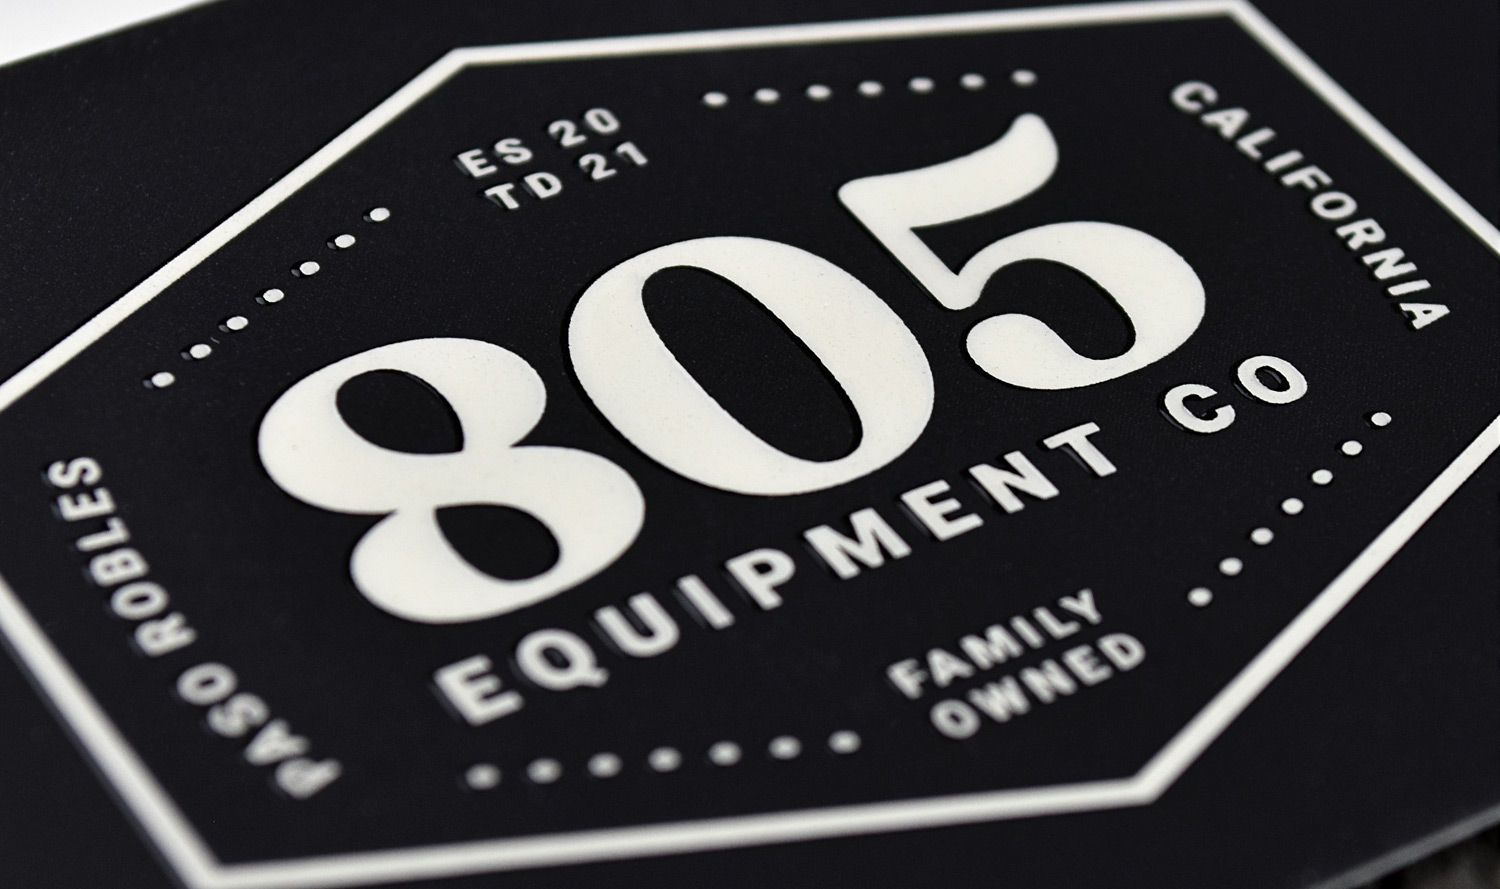 805 Equipment Co